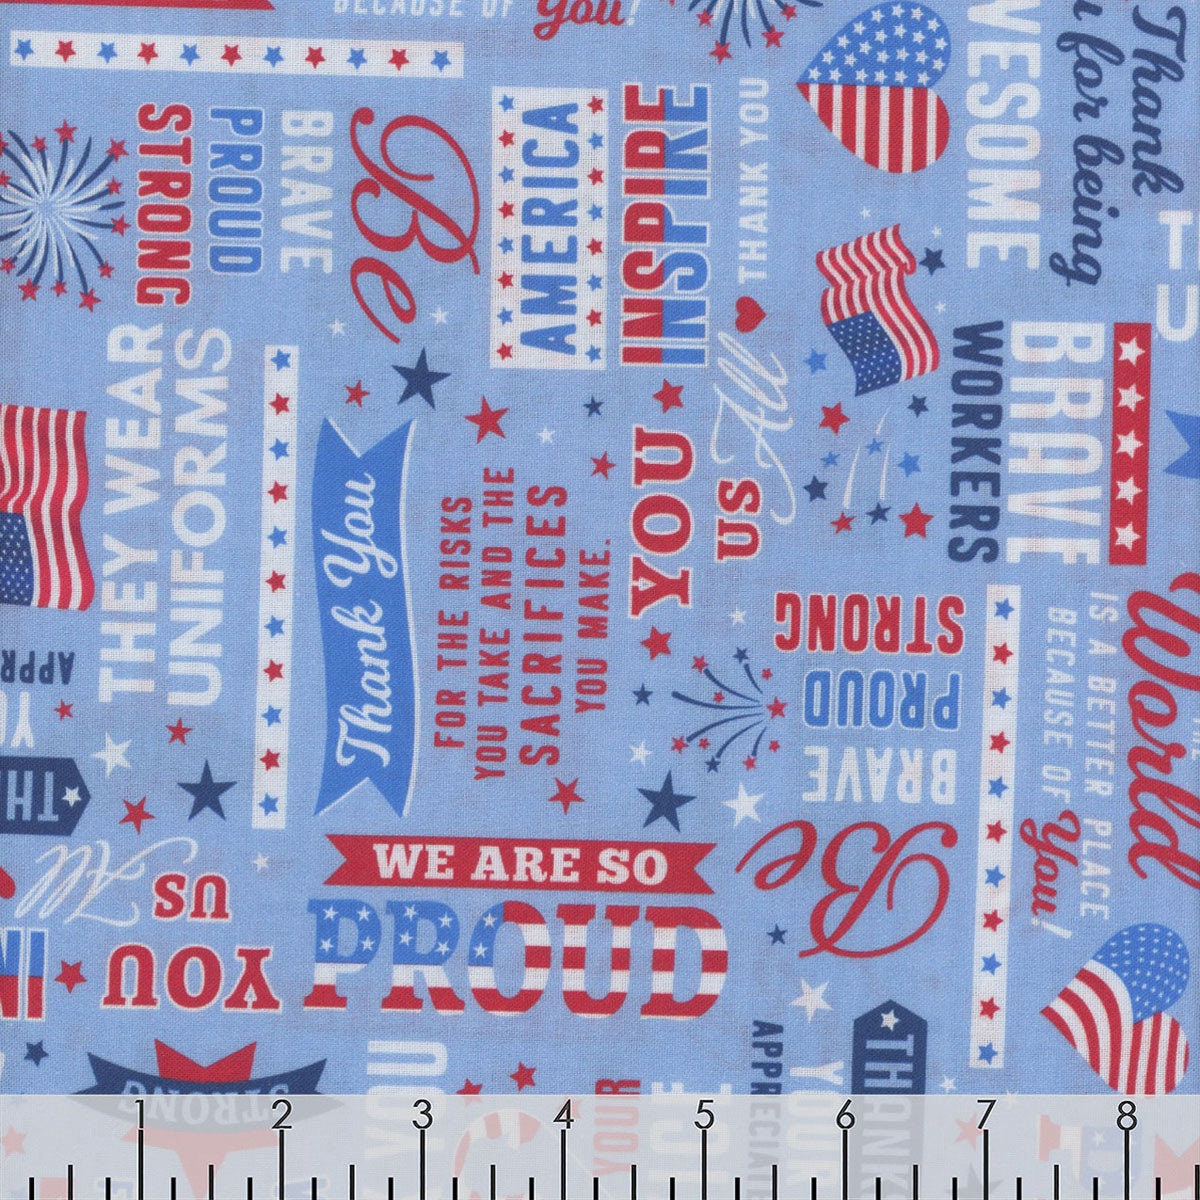 True Hero Medium Blue Patriotic Words Fabric - 26" REMNANT CUT - Kanvas by Benarex 14148B-54, Blue Patriotic Words Fabric